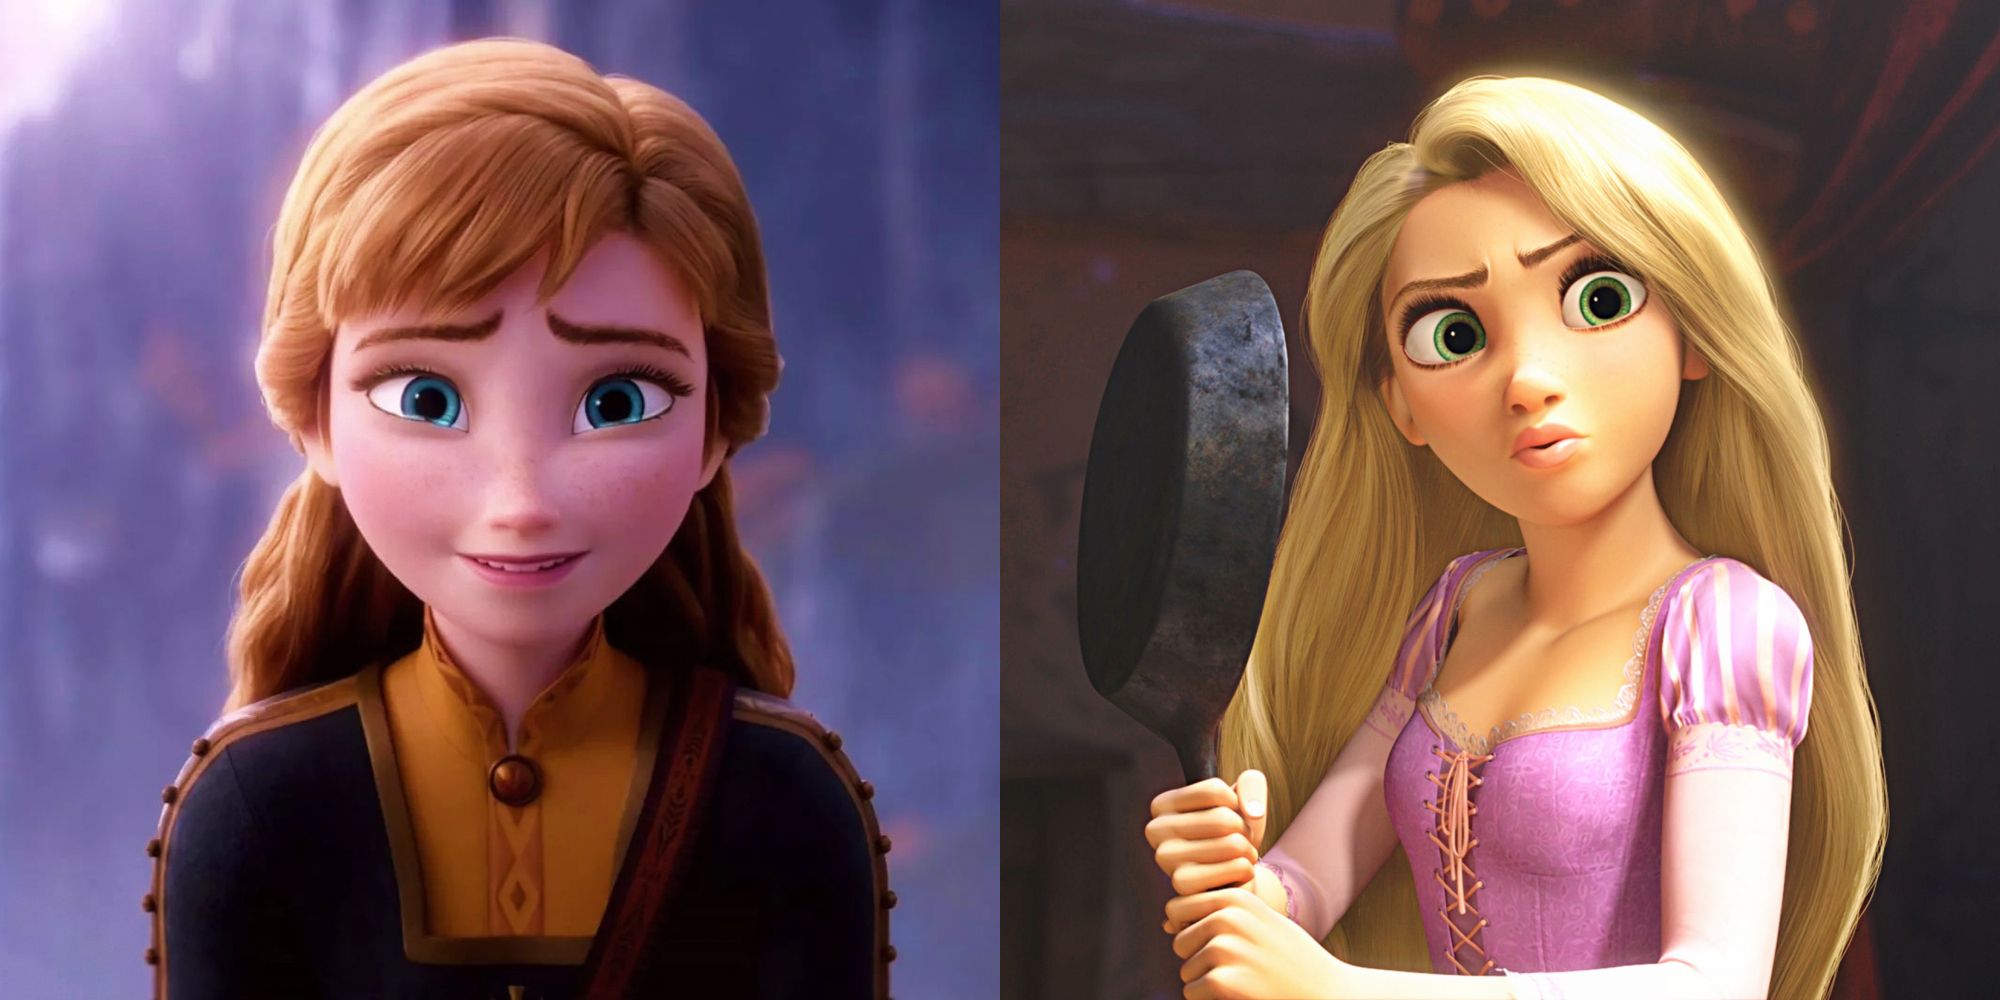 Split image: Anna looking sheepish, Rapunzel wielding a frying pan